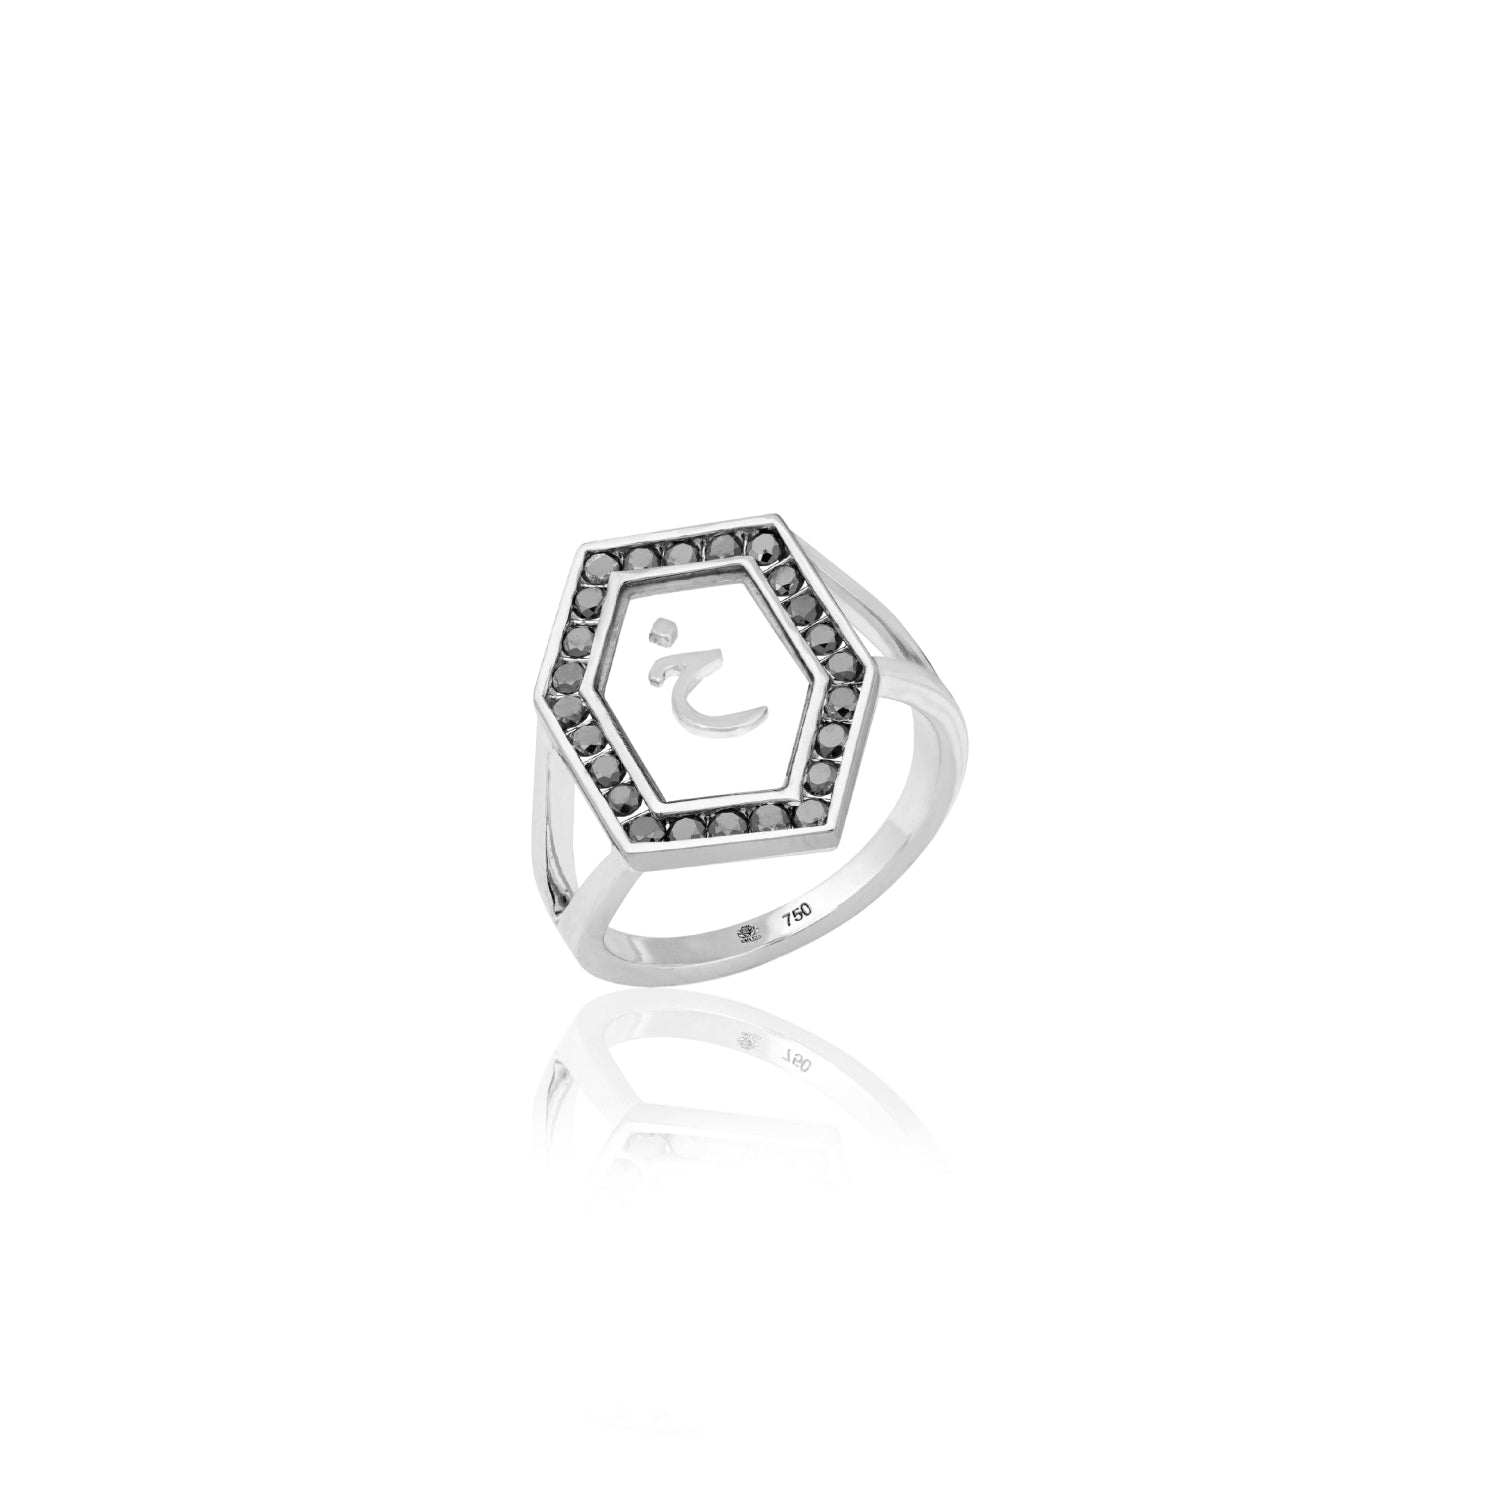 Qamoos 1.0 Letter خ Black Diamond Ring in White Gold